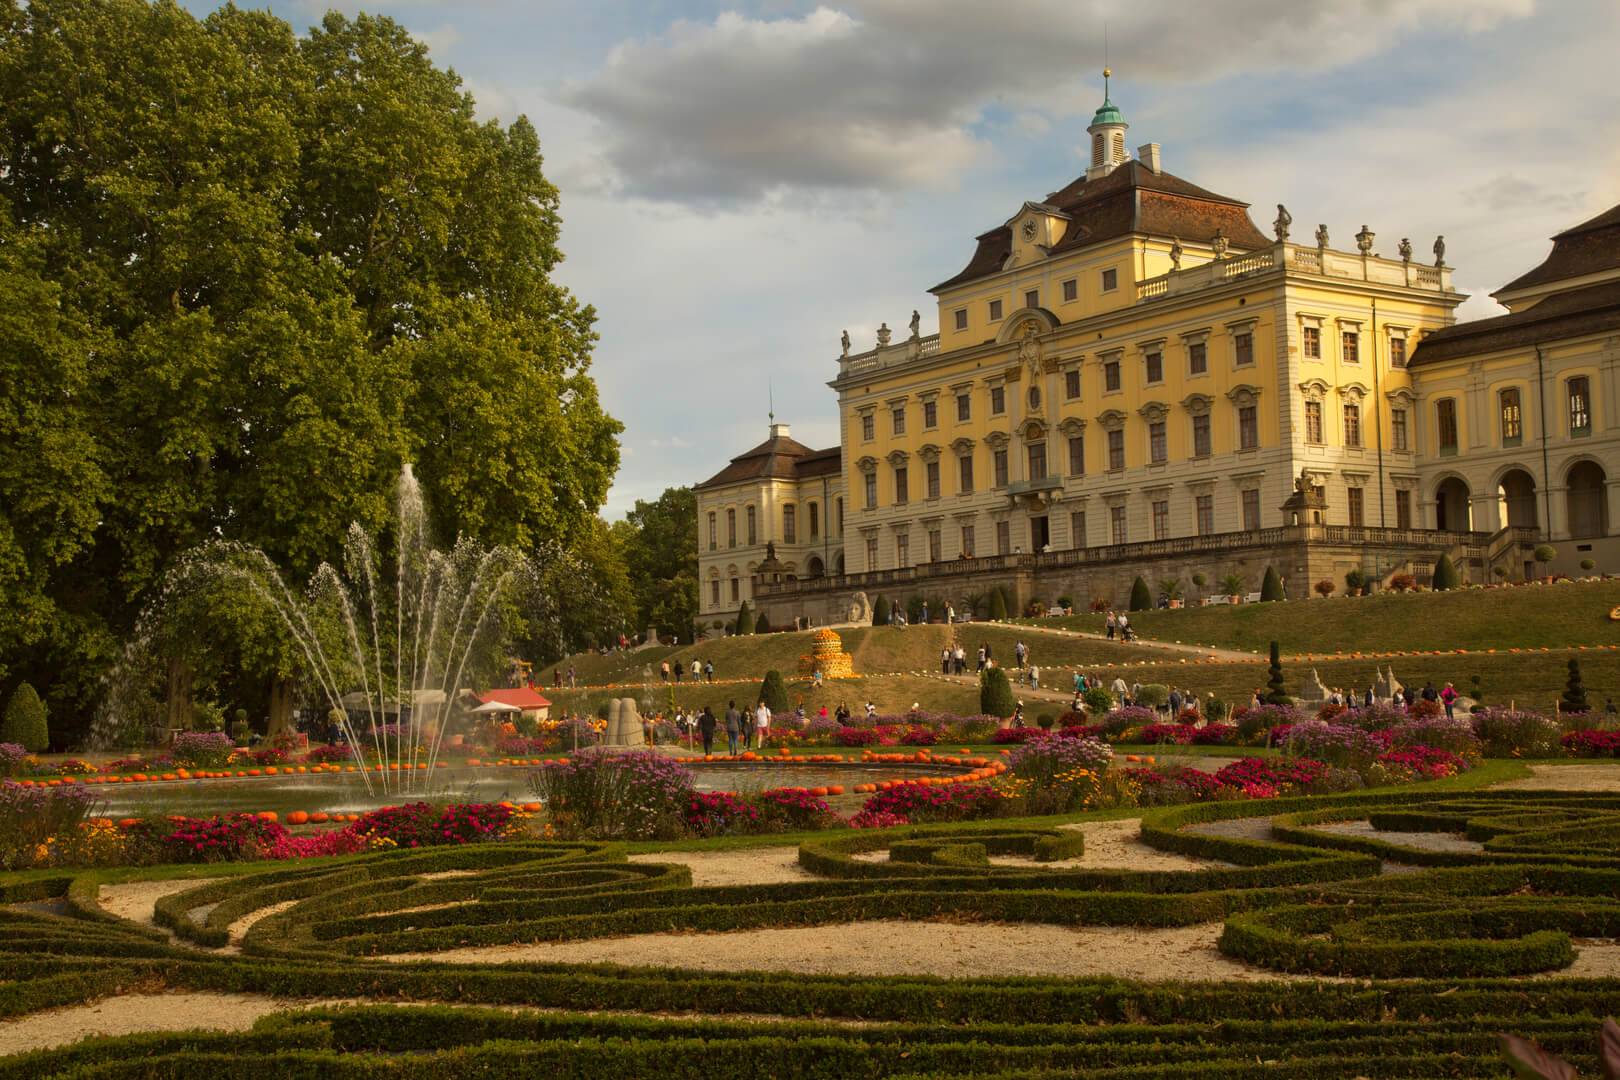 Château et jardins de Ludwigsburg "Blossoming Baroque" à Ludwigsburg, Allemagne.